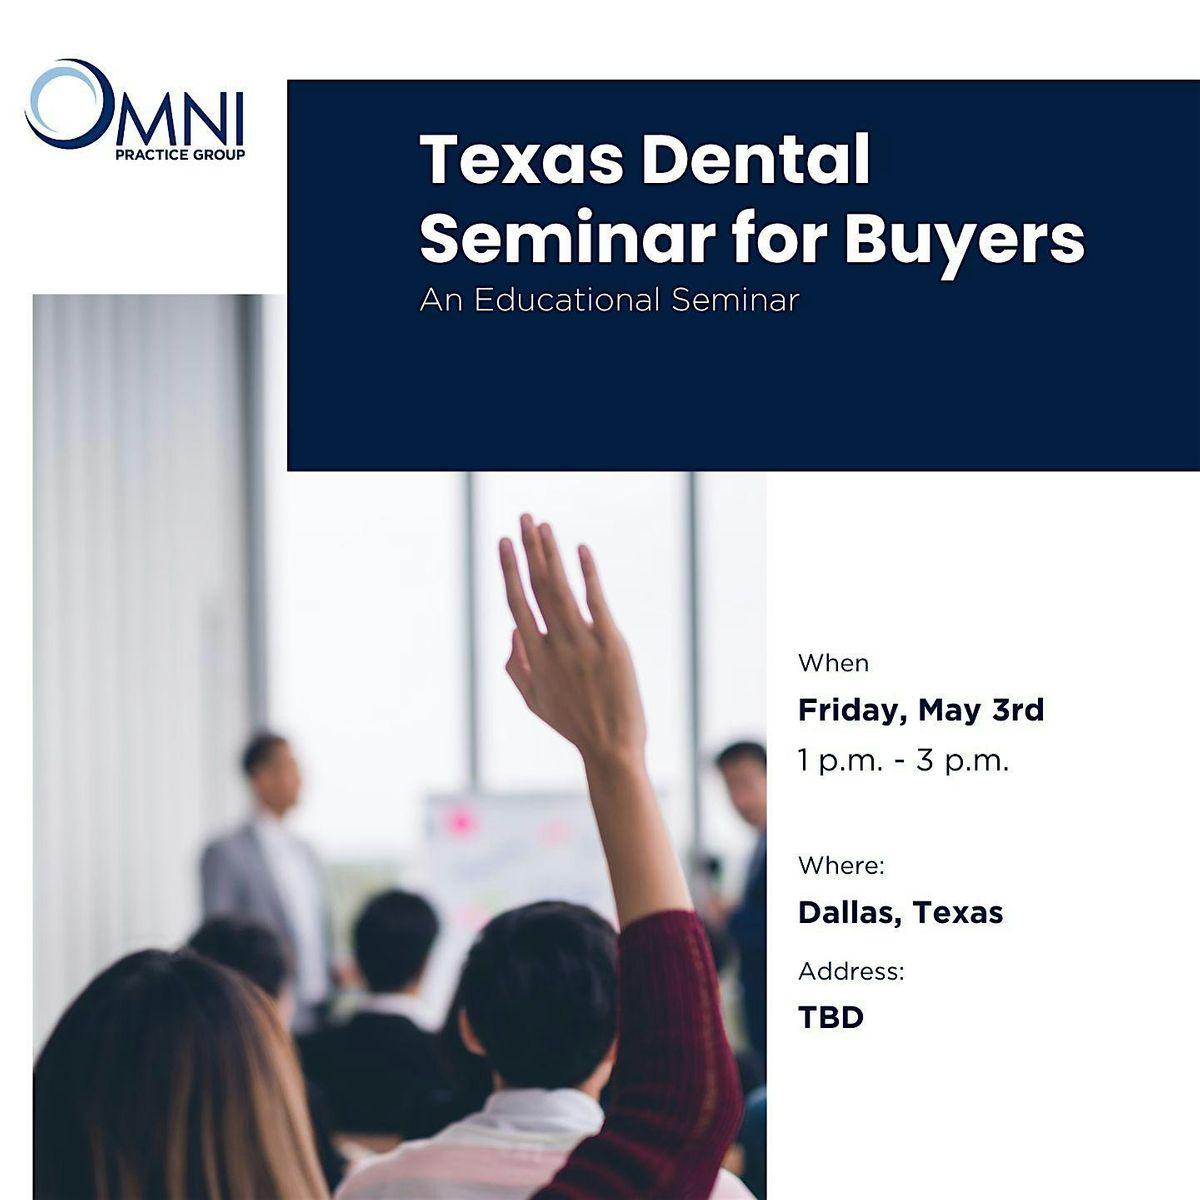 Texas Dental Seminar for Buyers